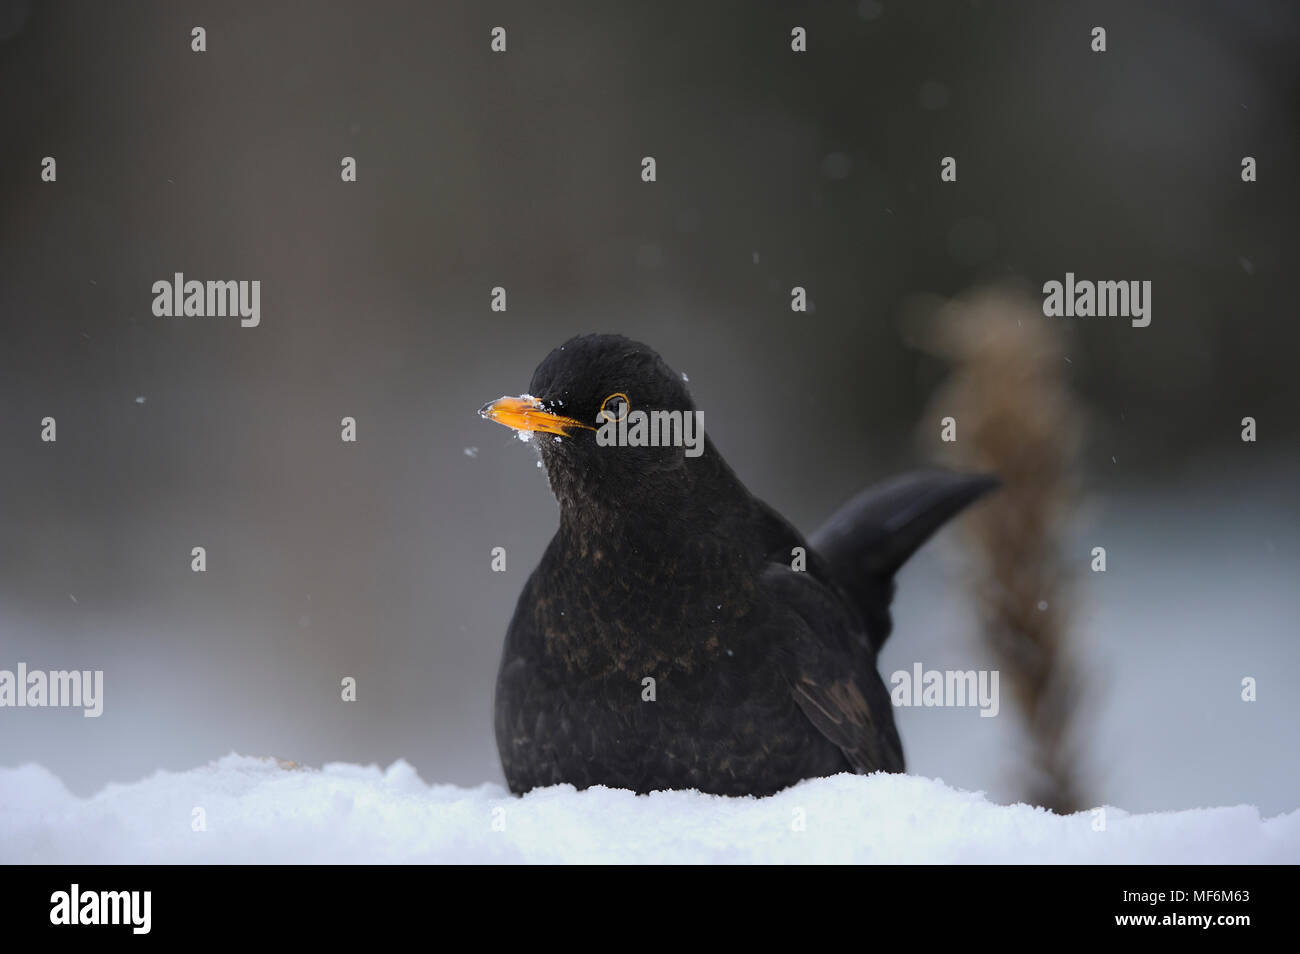 Male Blackbird in falling snow Stock Photo